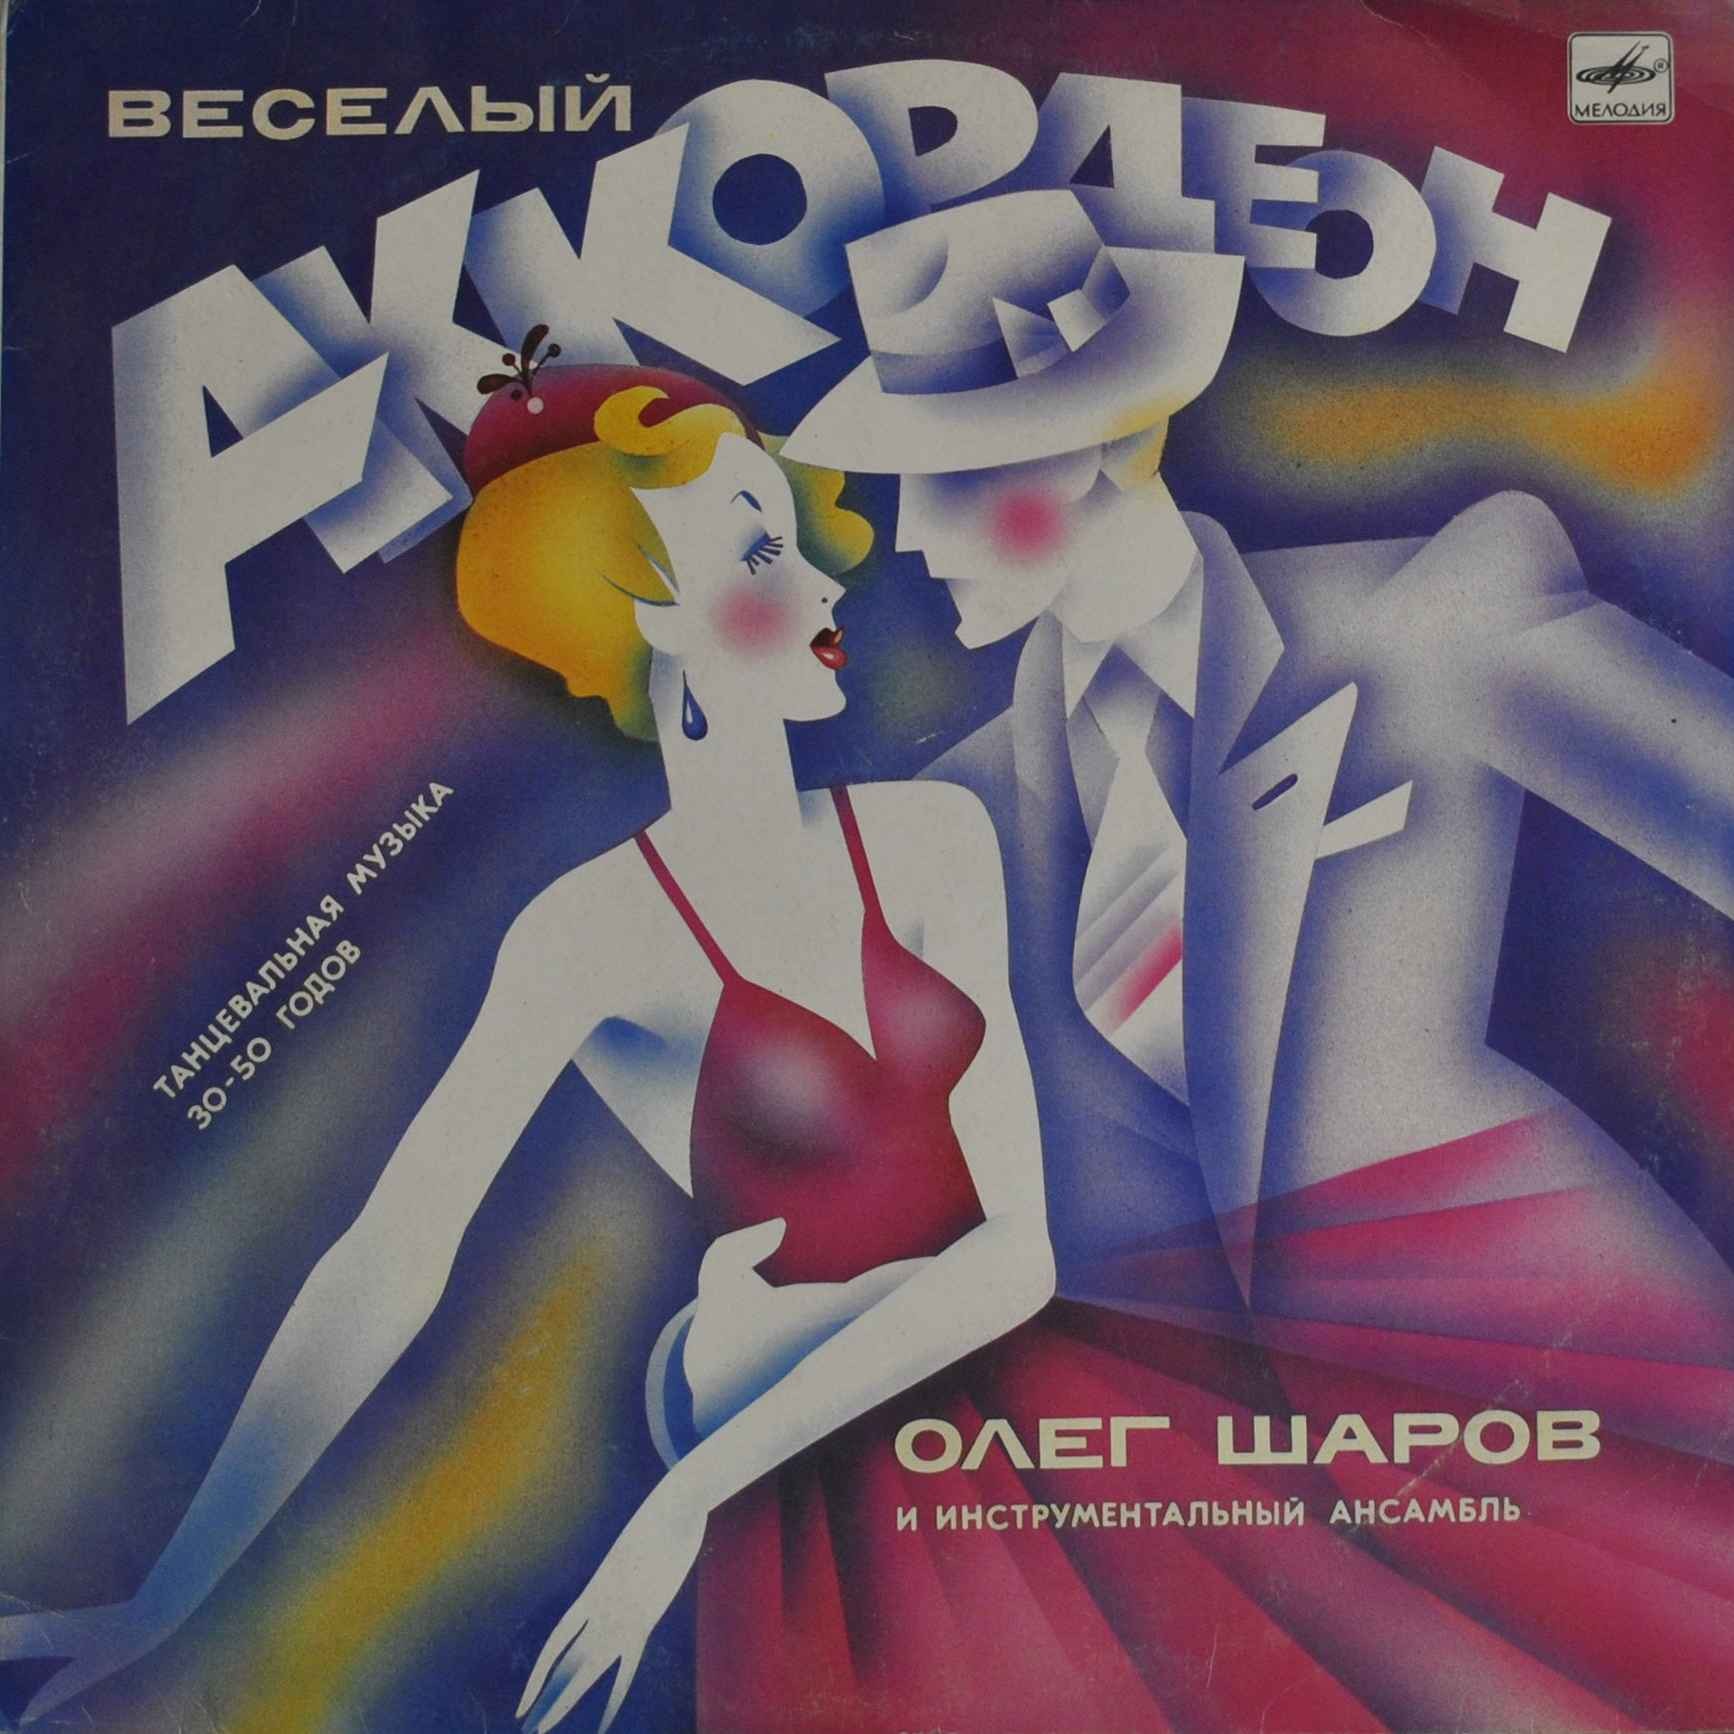 ВЕСЕЛЫЙ АККОРДЕОН. Танцевальная музыка 30-х — 50-х годов